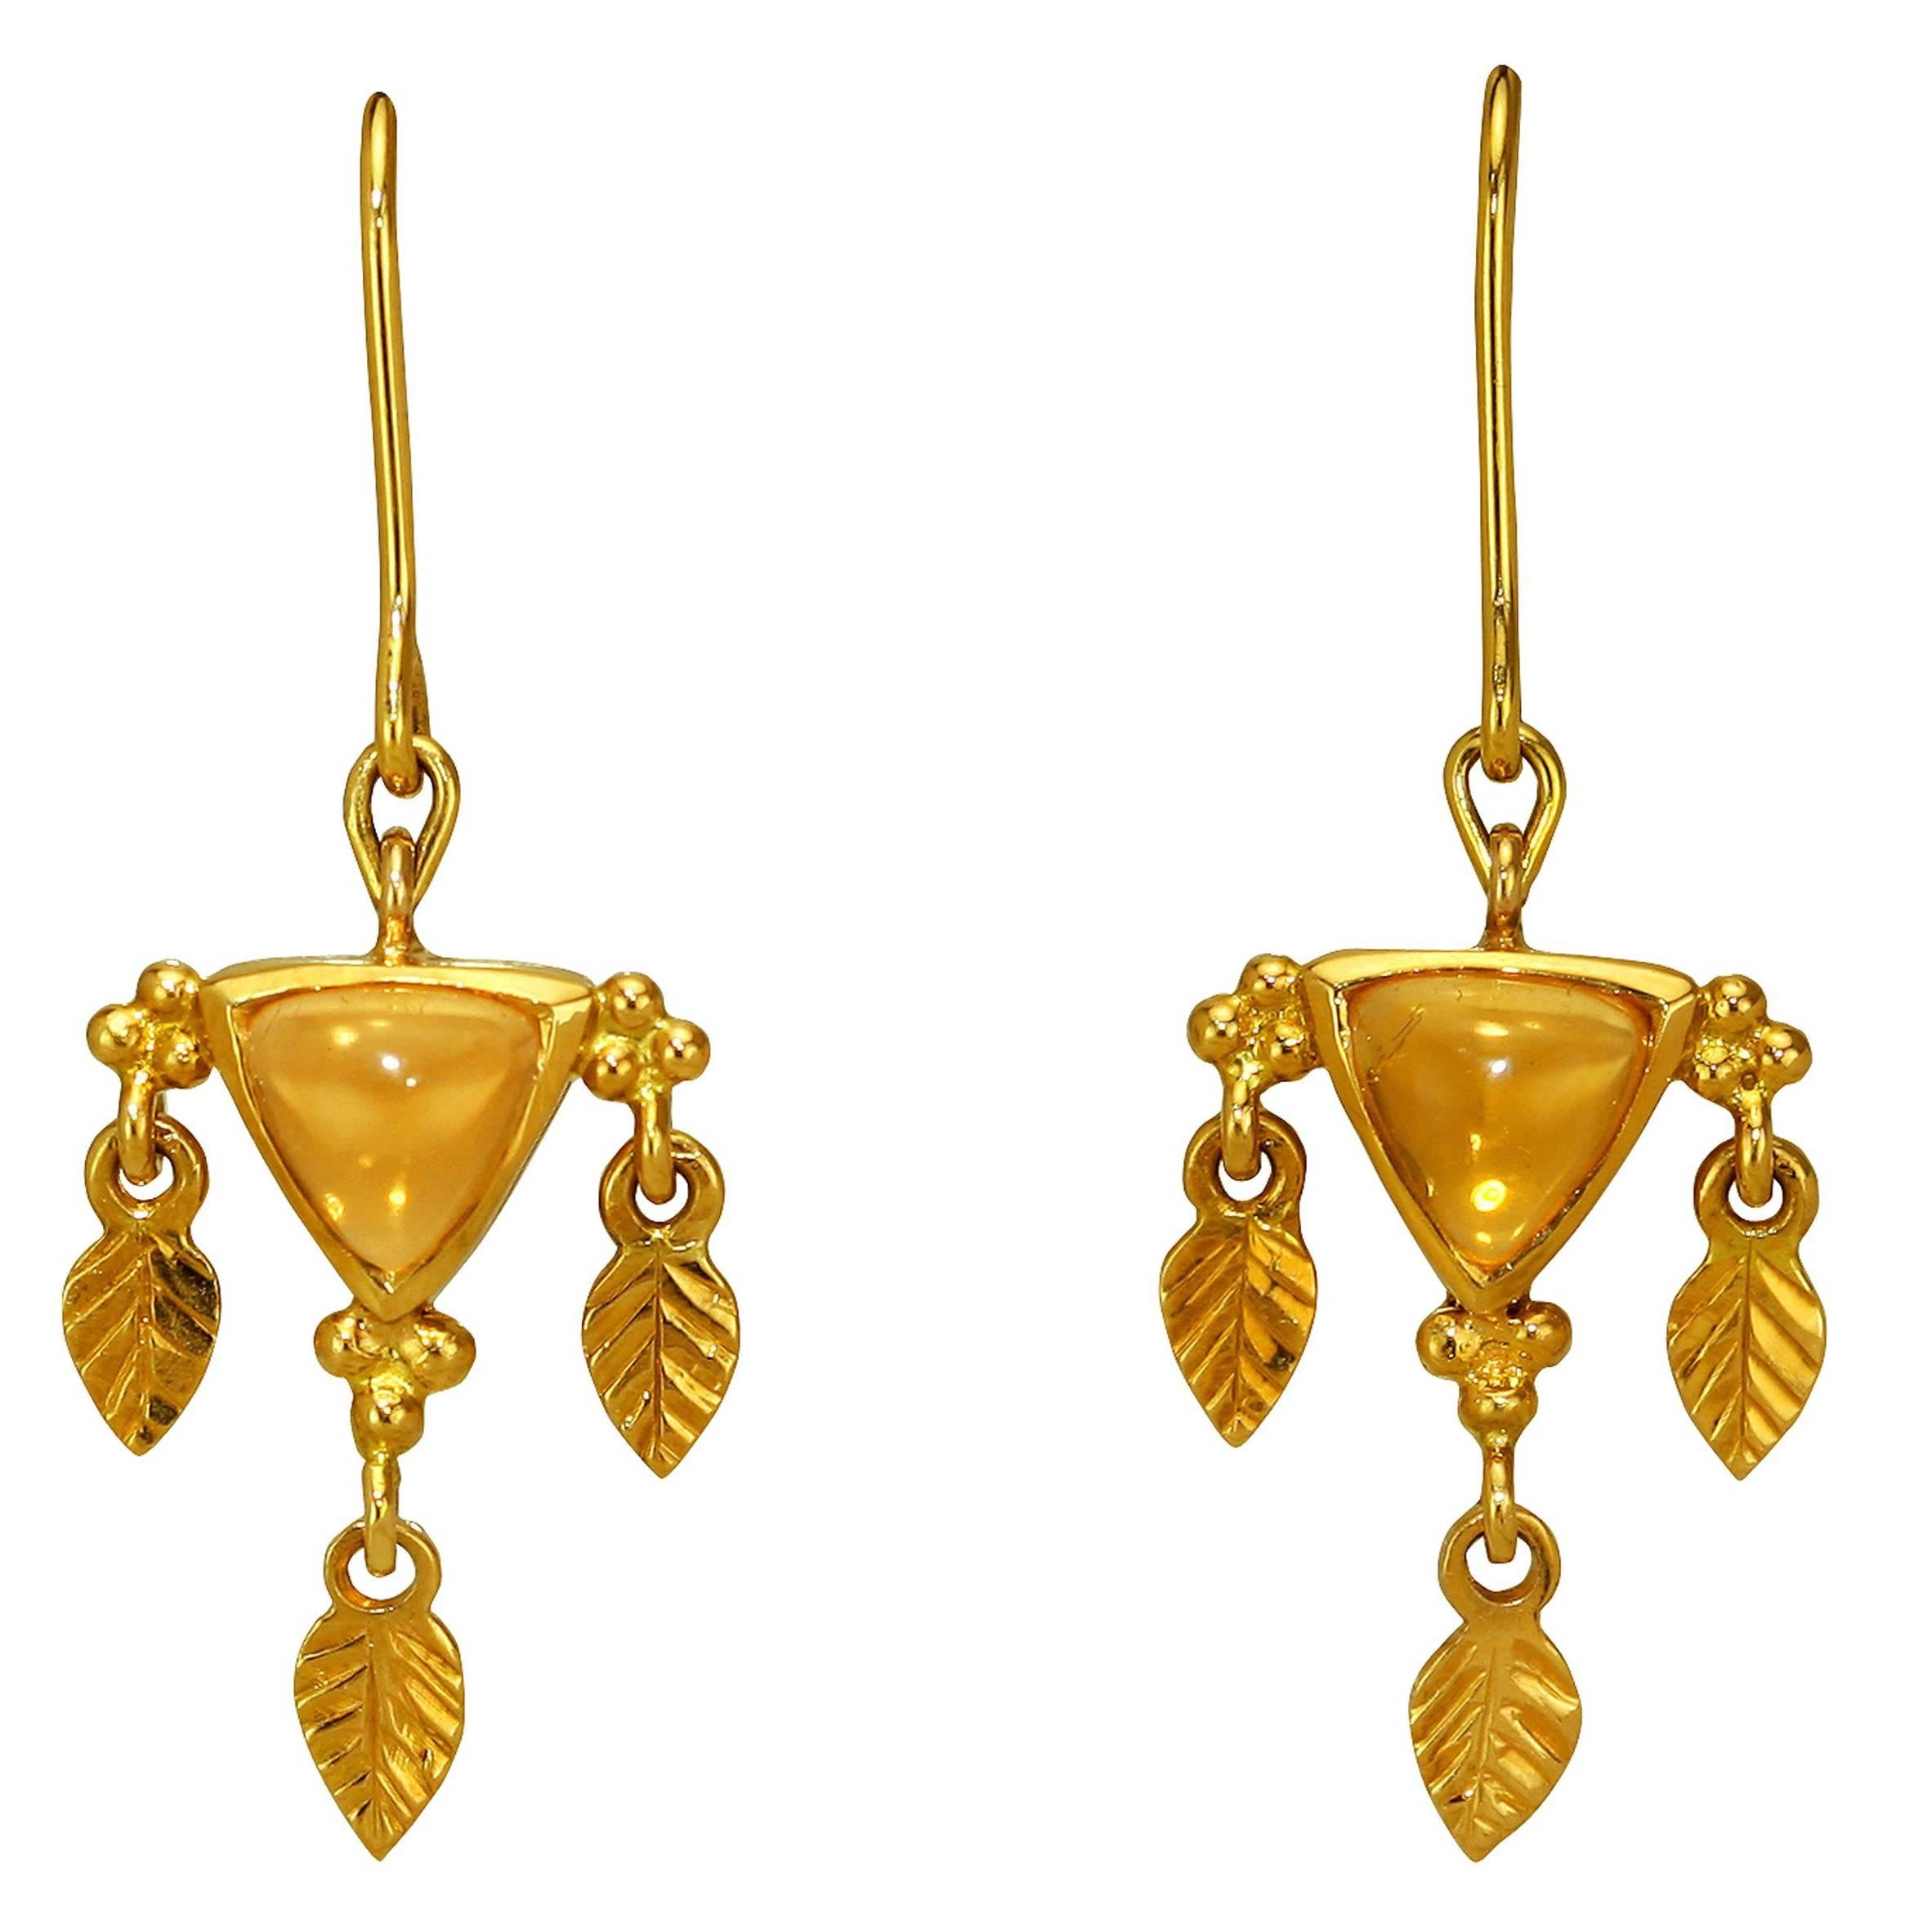 Crevoshay Handmade Opal Yellow Gold Earrings